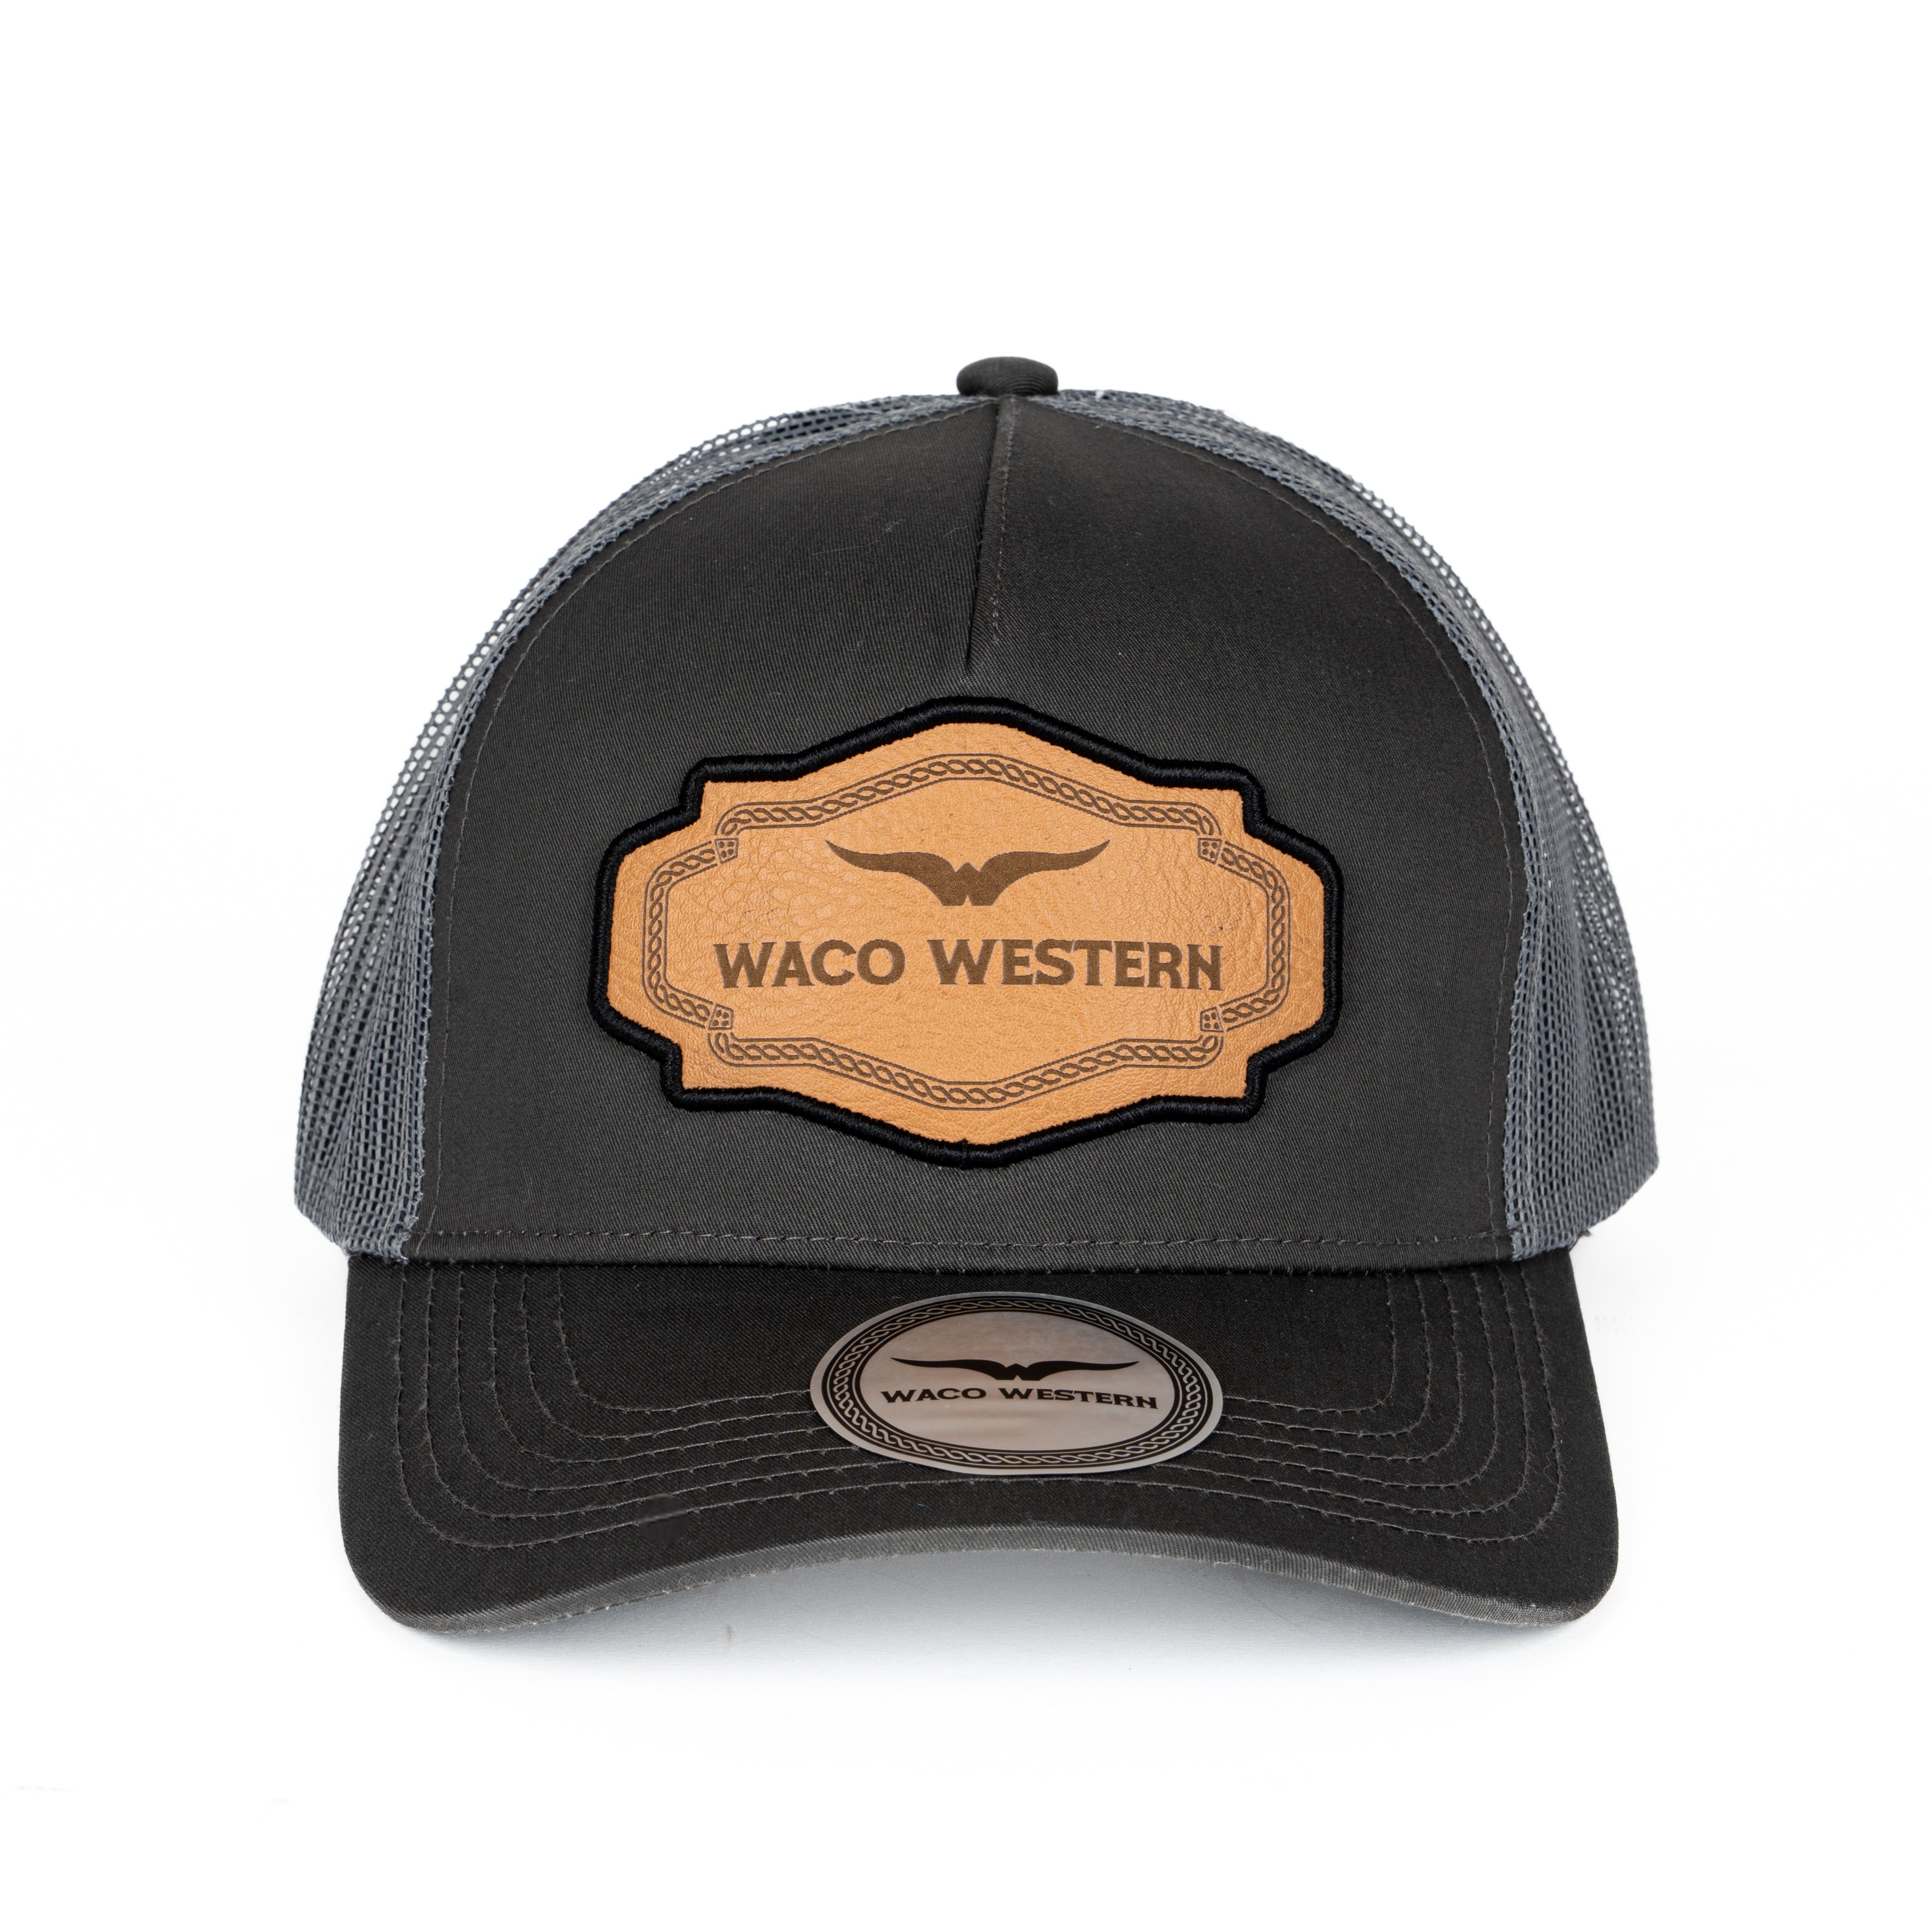 Waco Western